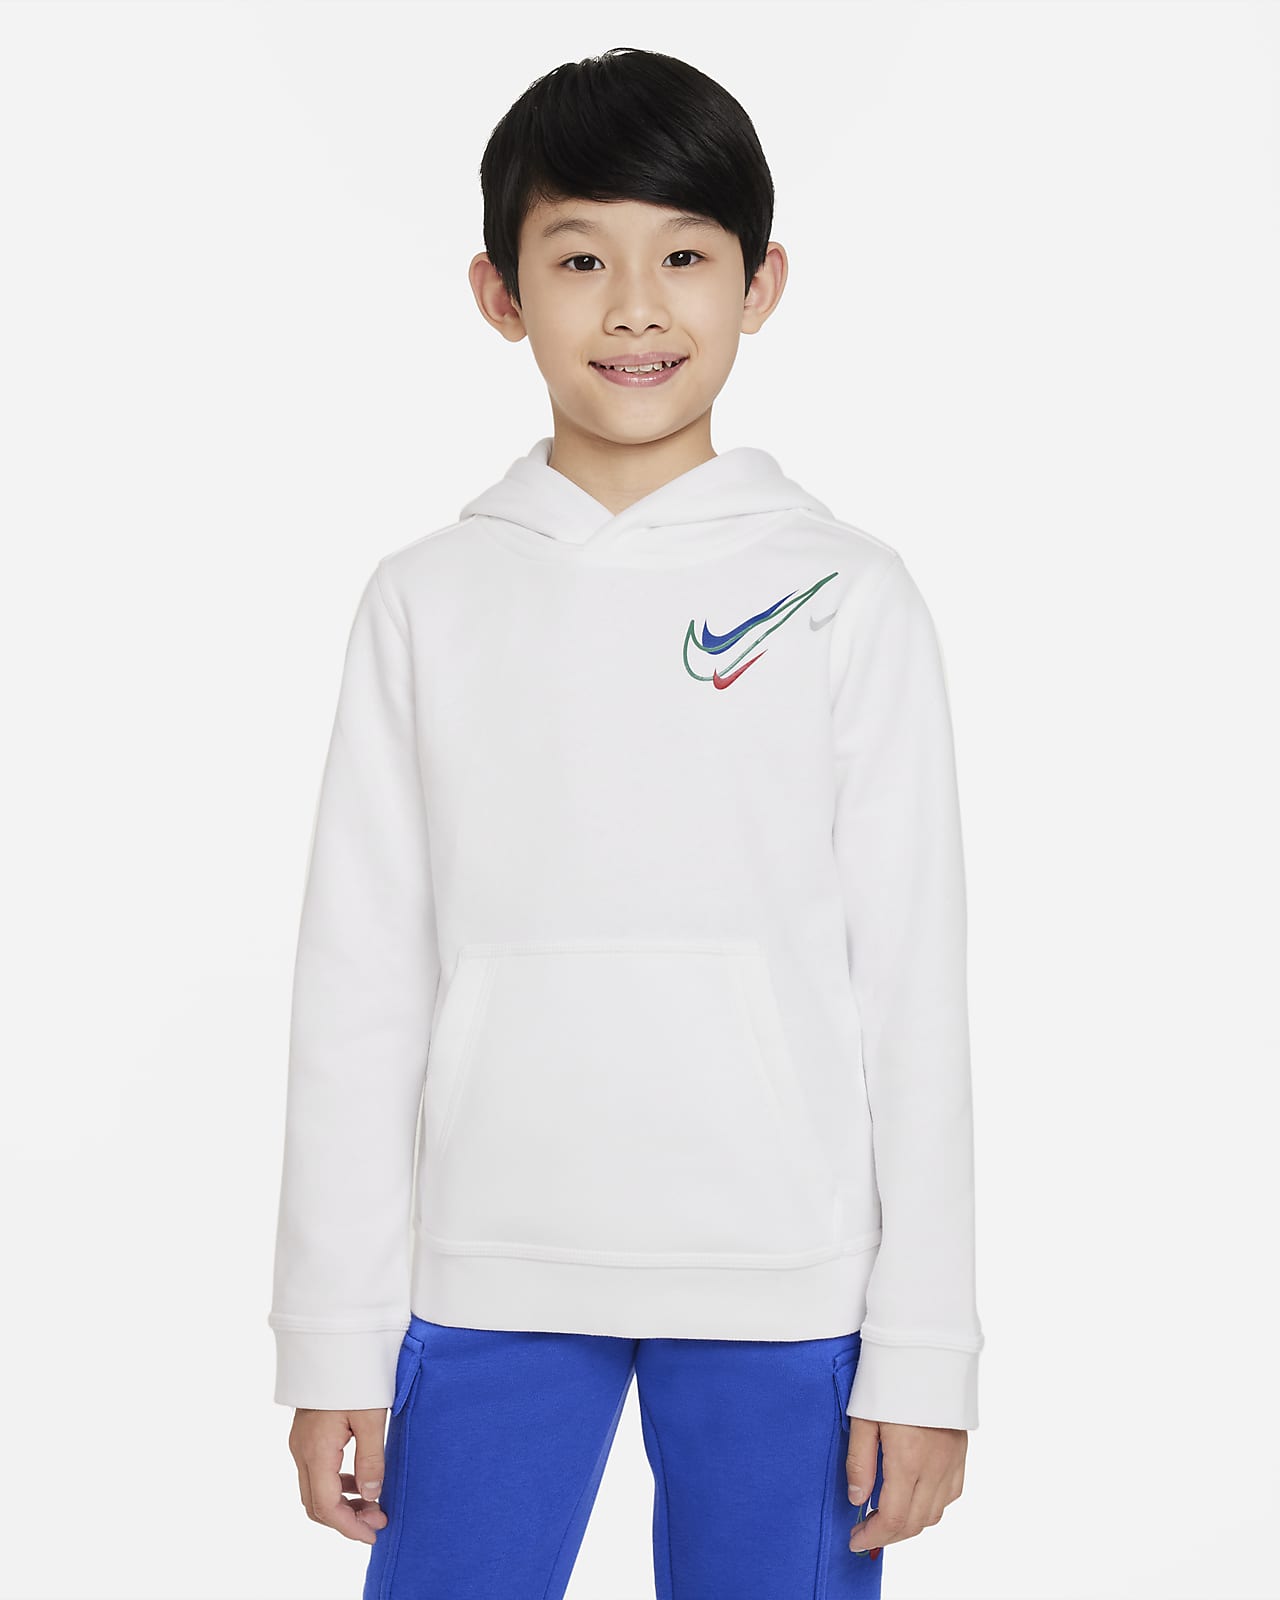 Nike Sportswear Fleece-Hoodie für ältere Kinder (Jungen)